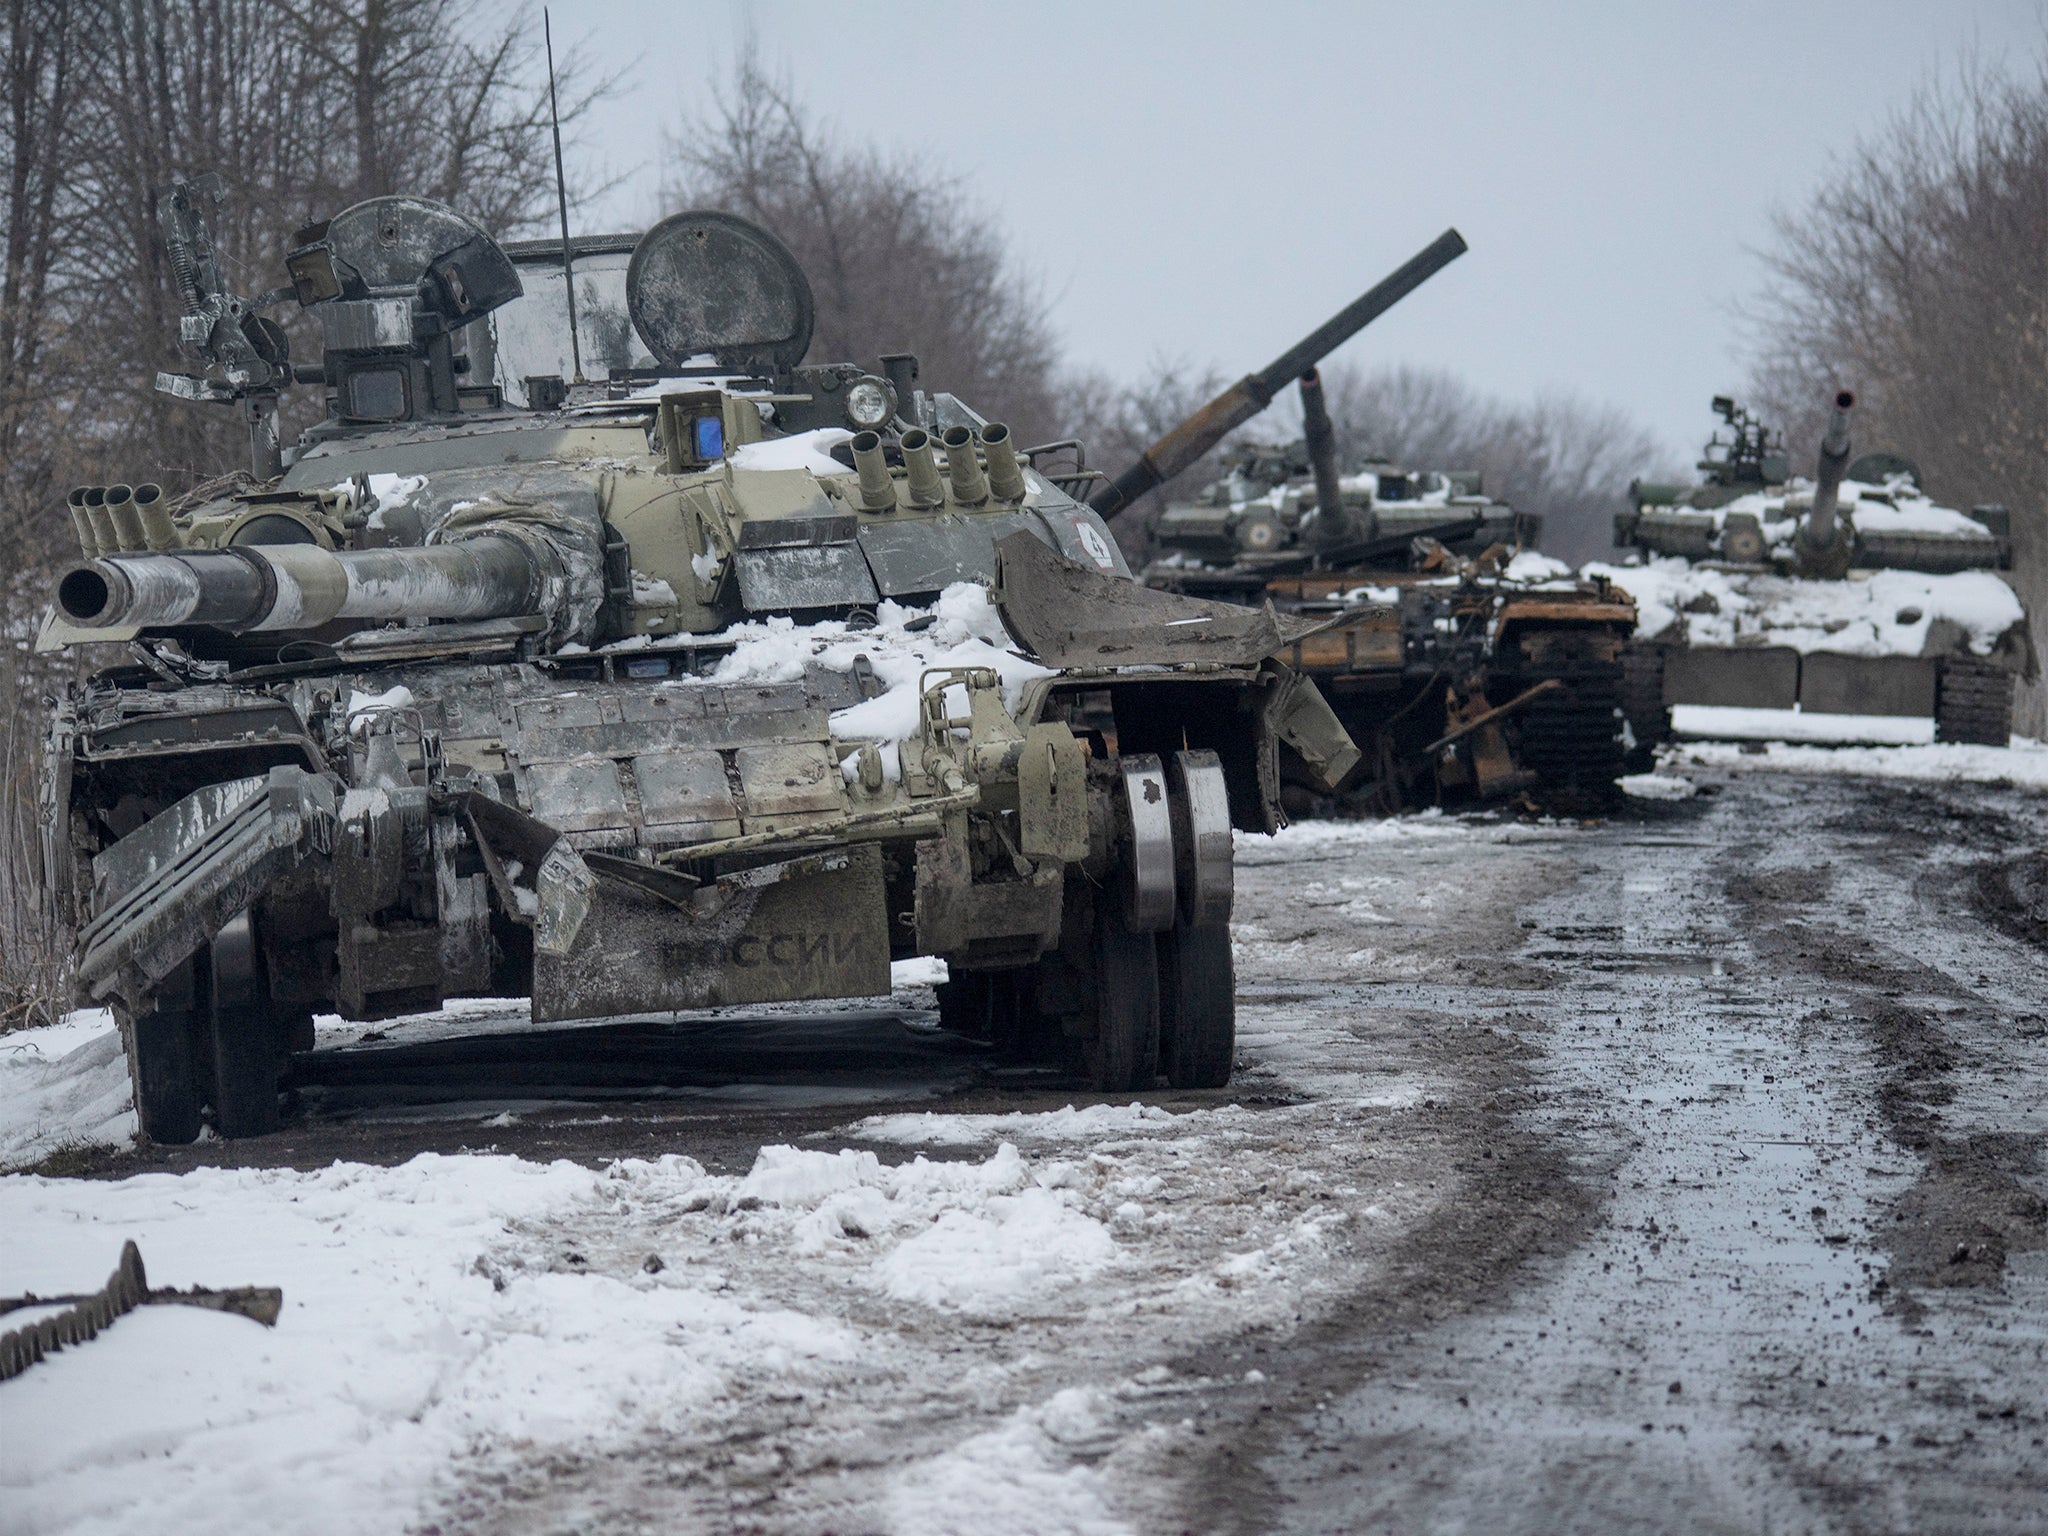 Destroyed Russian tanks in the Sumy region of northeast Ukraine